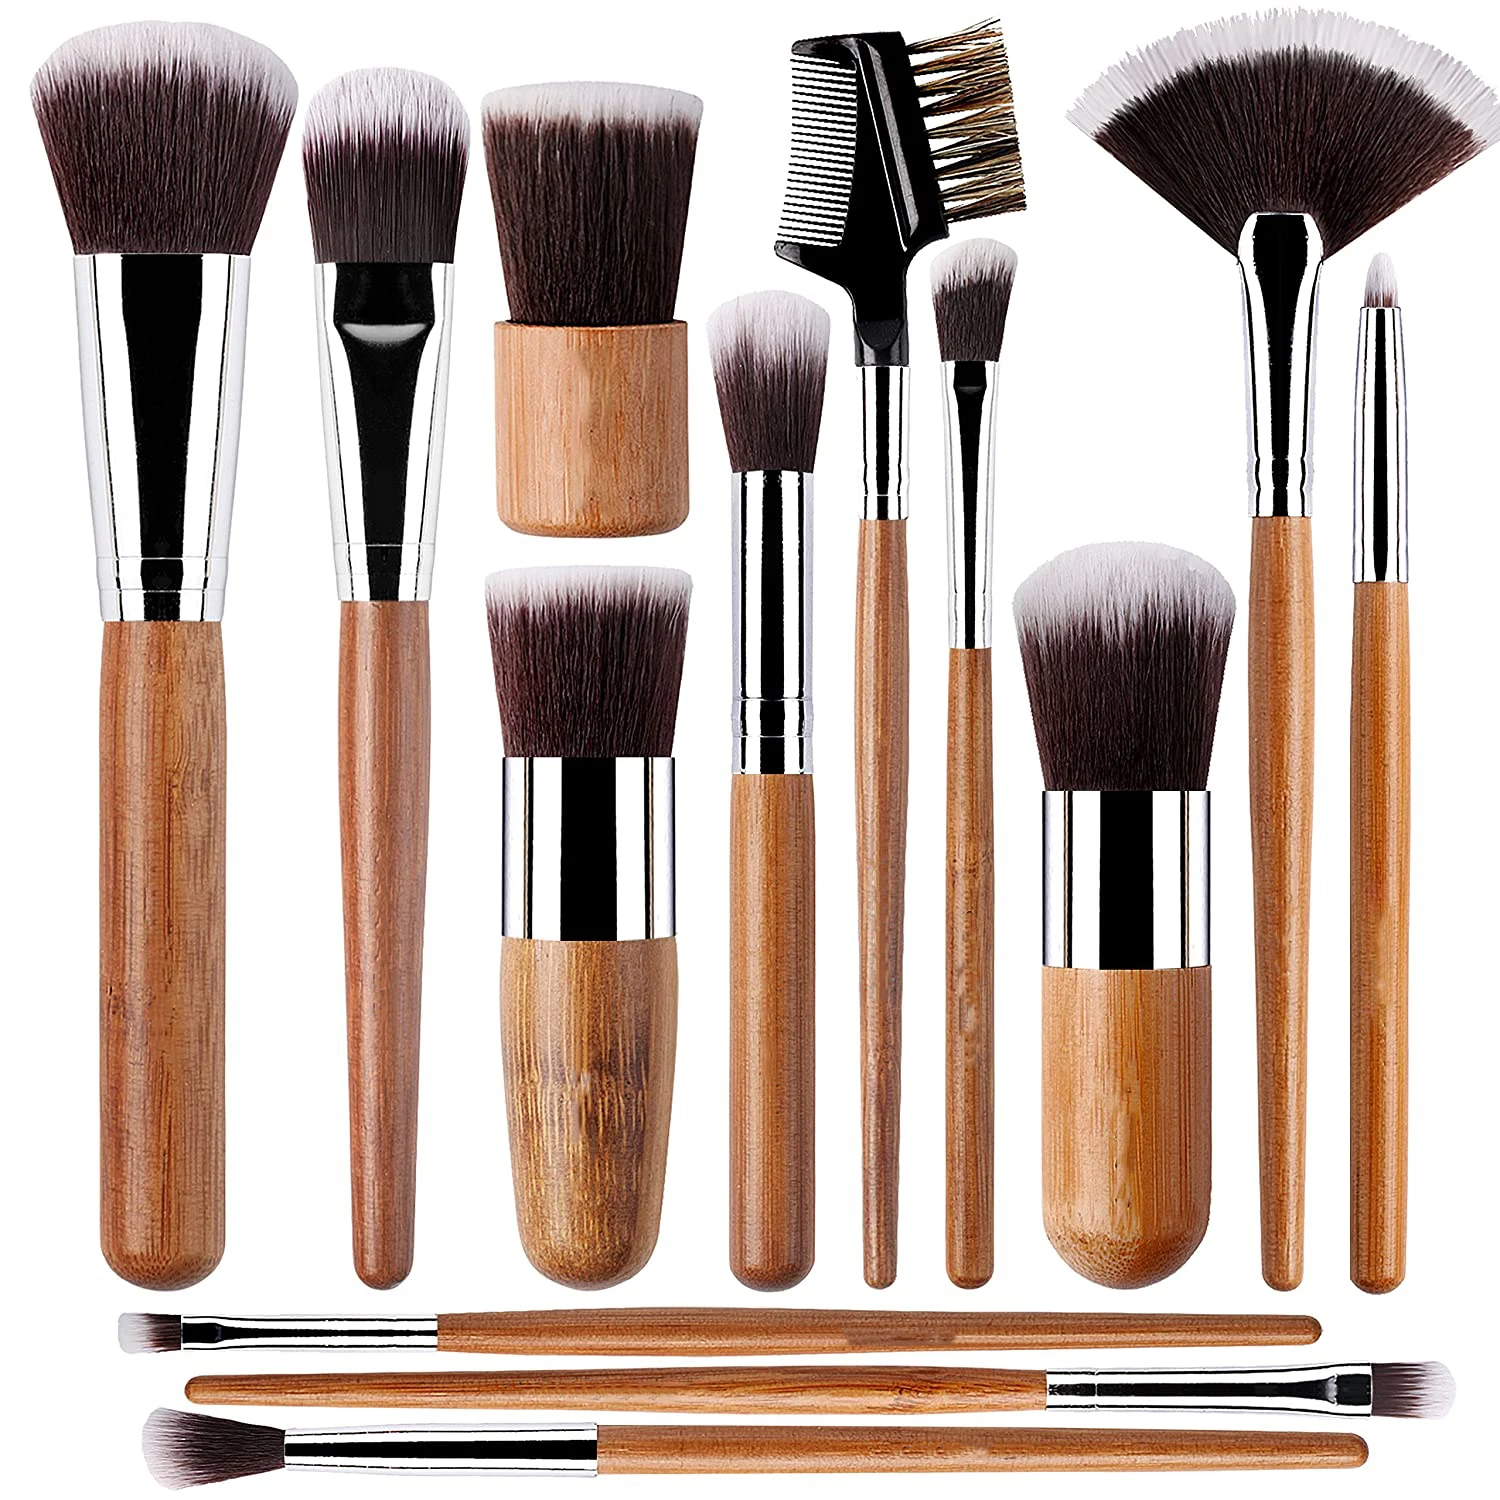 

13 Bamboo Makeup Brushes Professional Set Vegan Cruelty Free makeup brush Foundation Blending Blush Powder Kabuki Brushes, Wood color